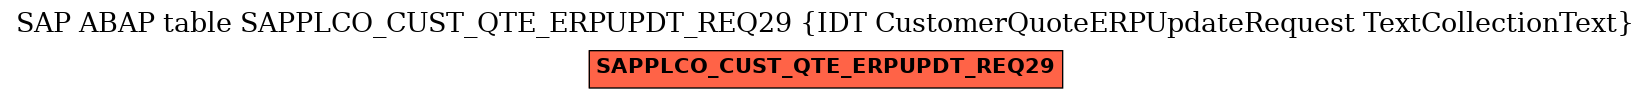 E-R Diagram for table SAPPLCO_CUST_QTE_ERPUPDT_REQ29 (IDT CustomerQuoteERPUpdateRequest TextCollectionText)